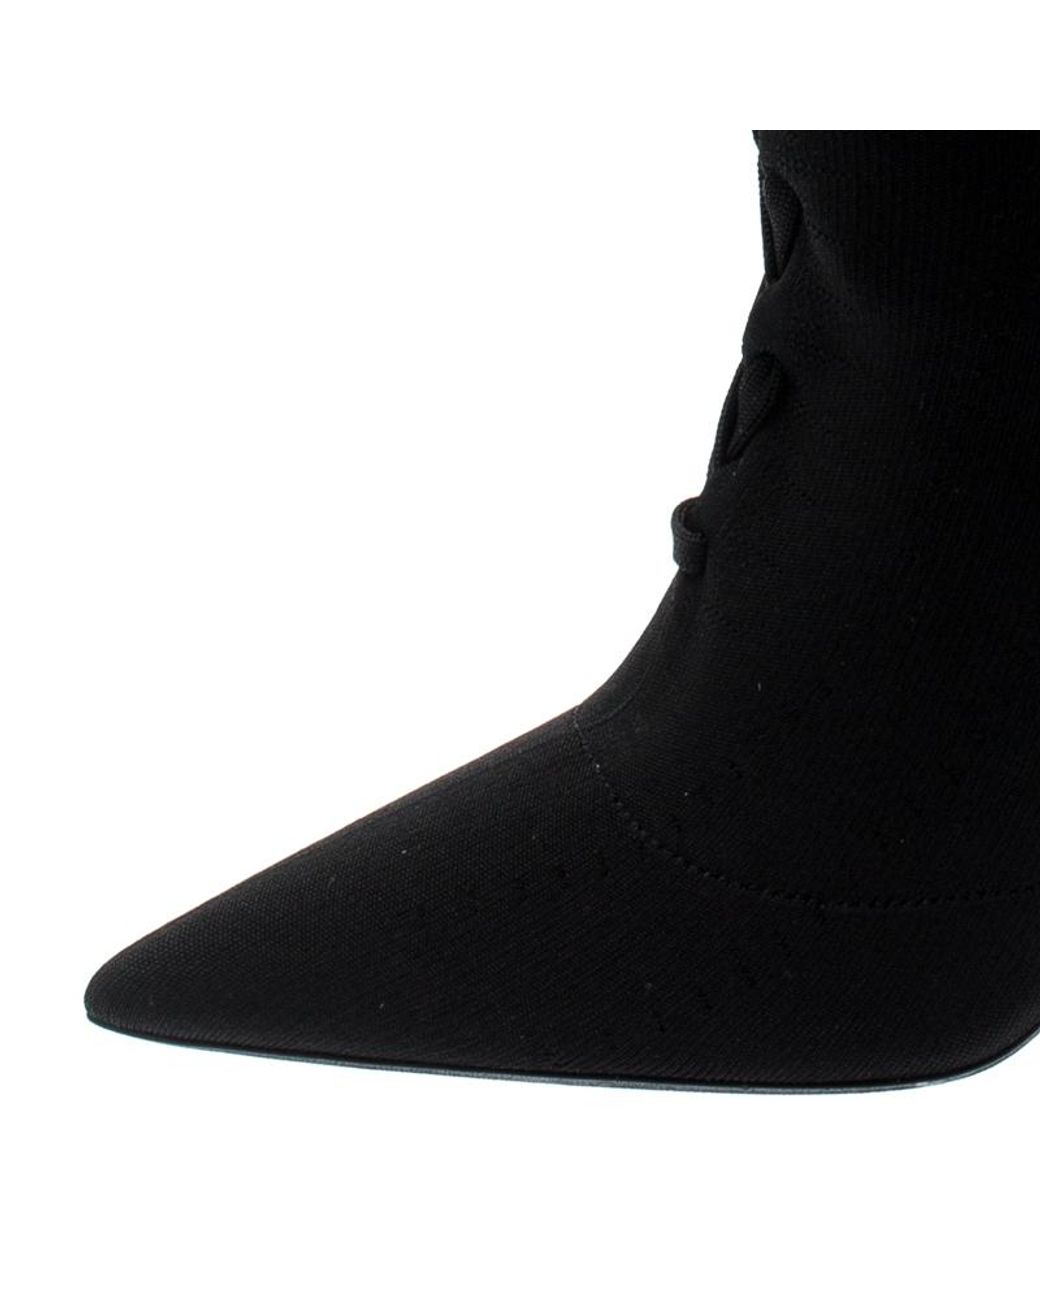 black sock boots size 5